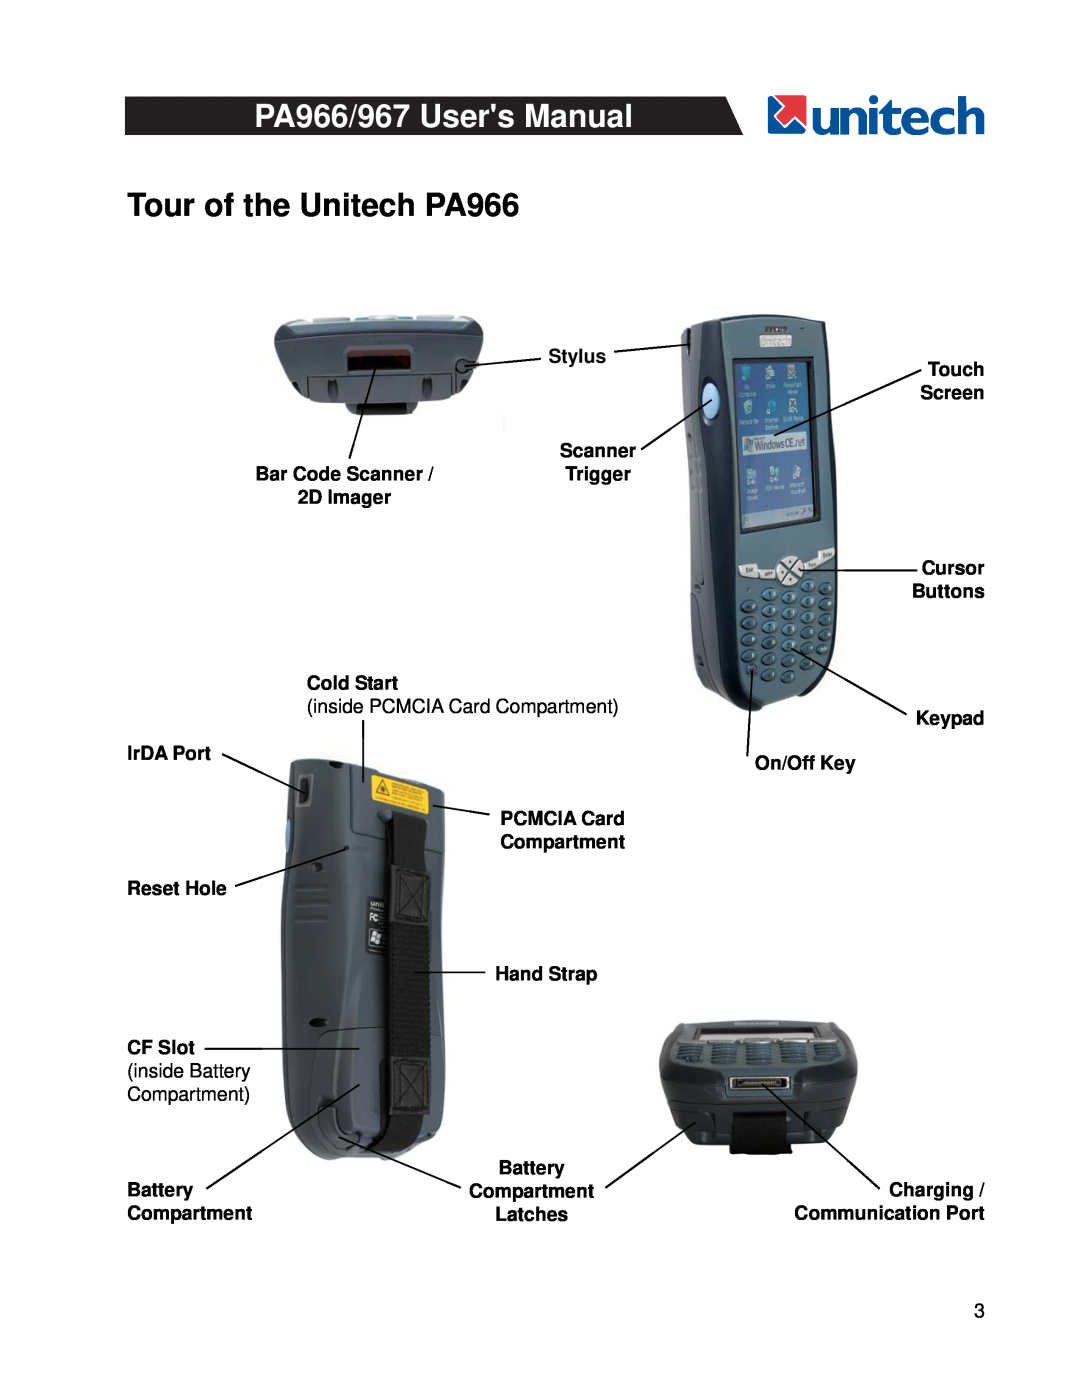 Unitech Tour of the Unitech PA966, Stylus Scanner Bar Code Scanner /Trigger, 2D Imager Cold Start, Hand Strap CF Slot 